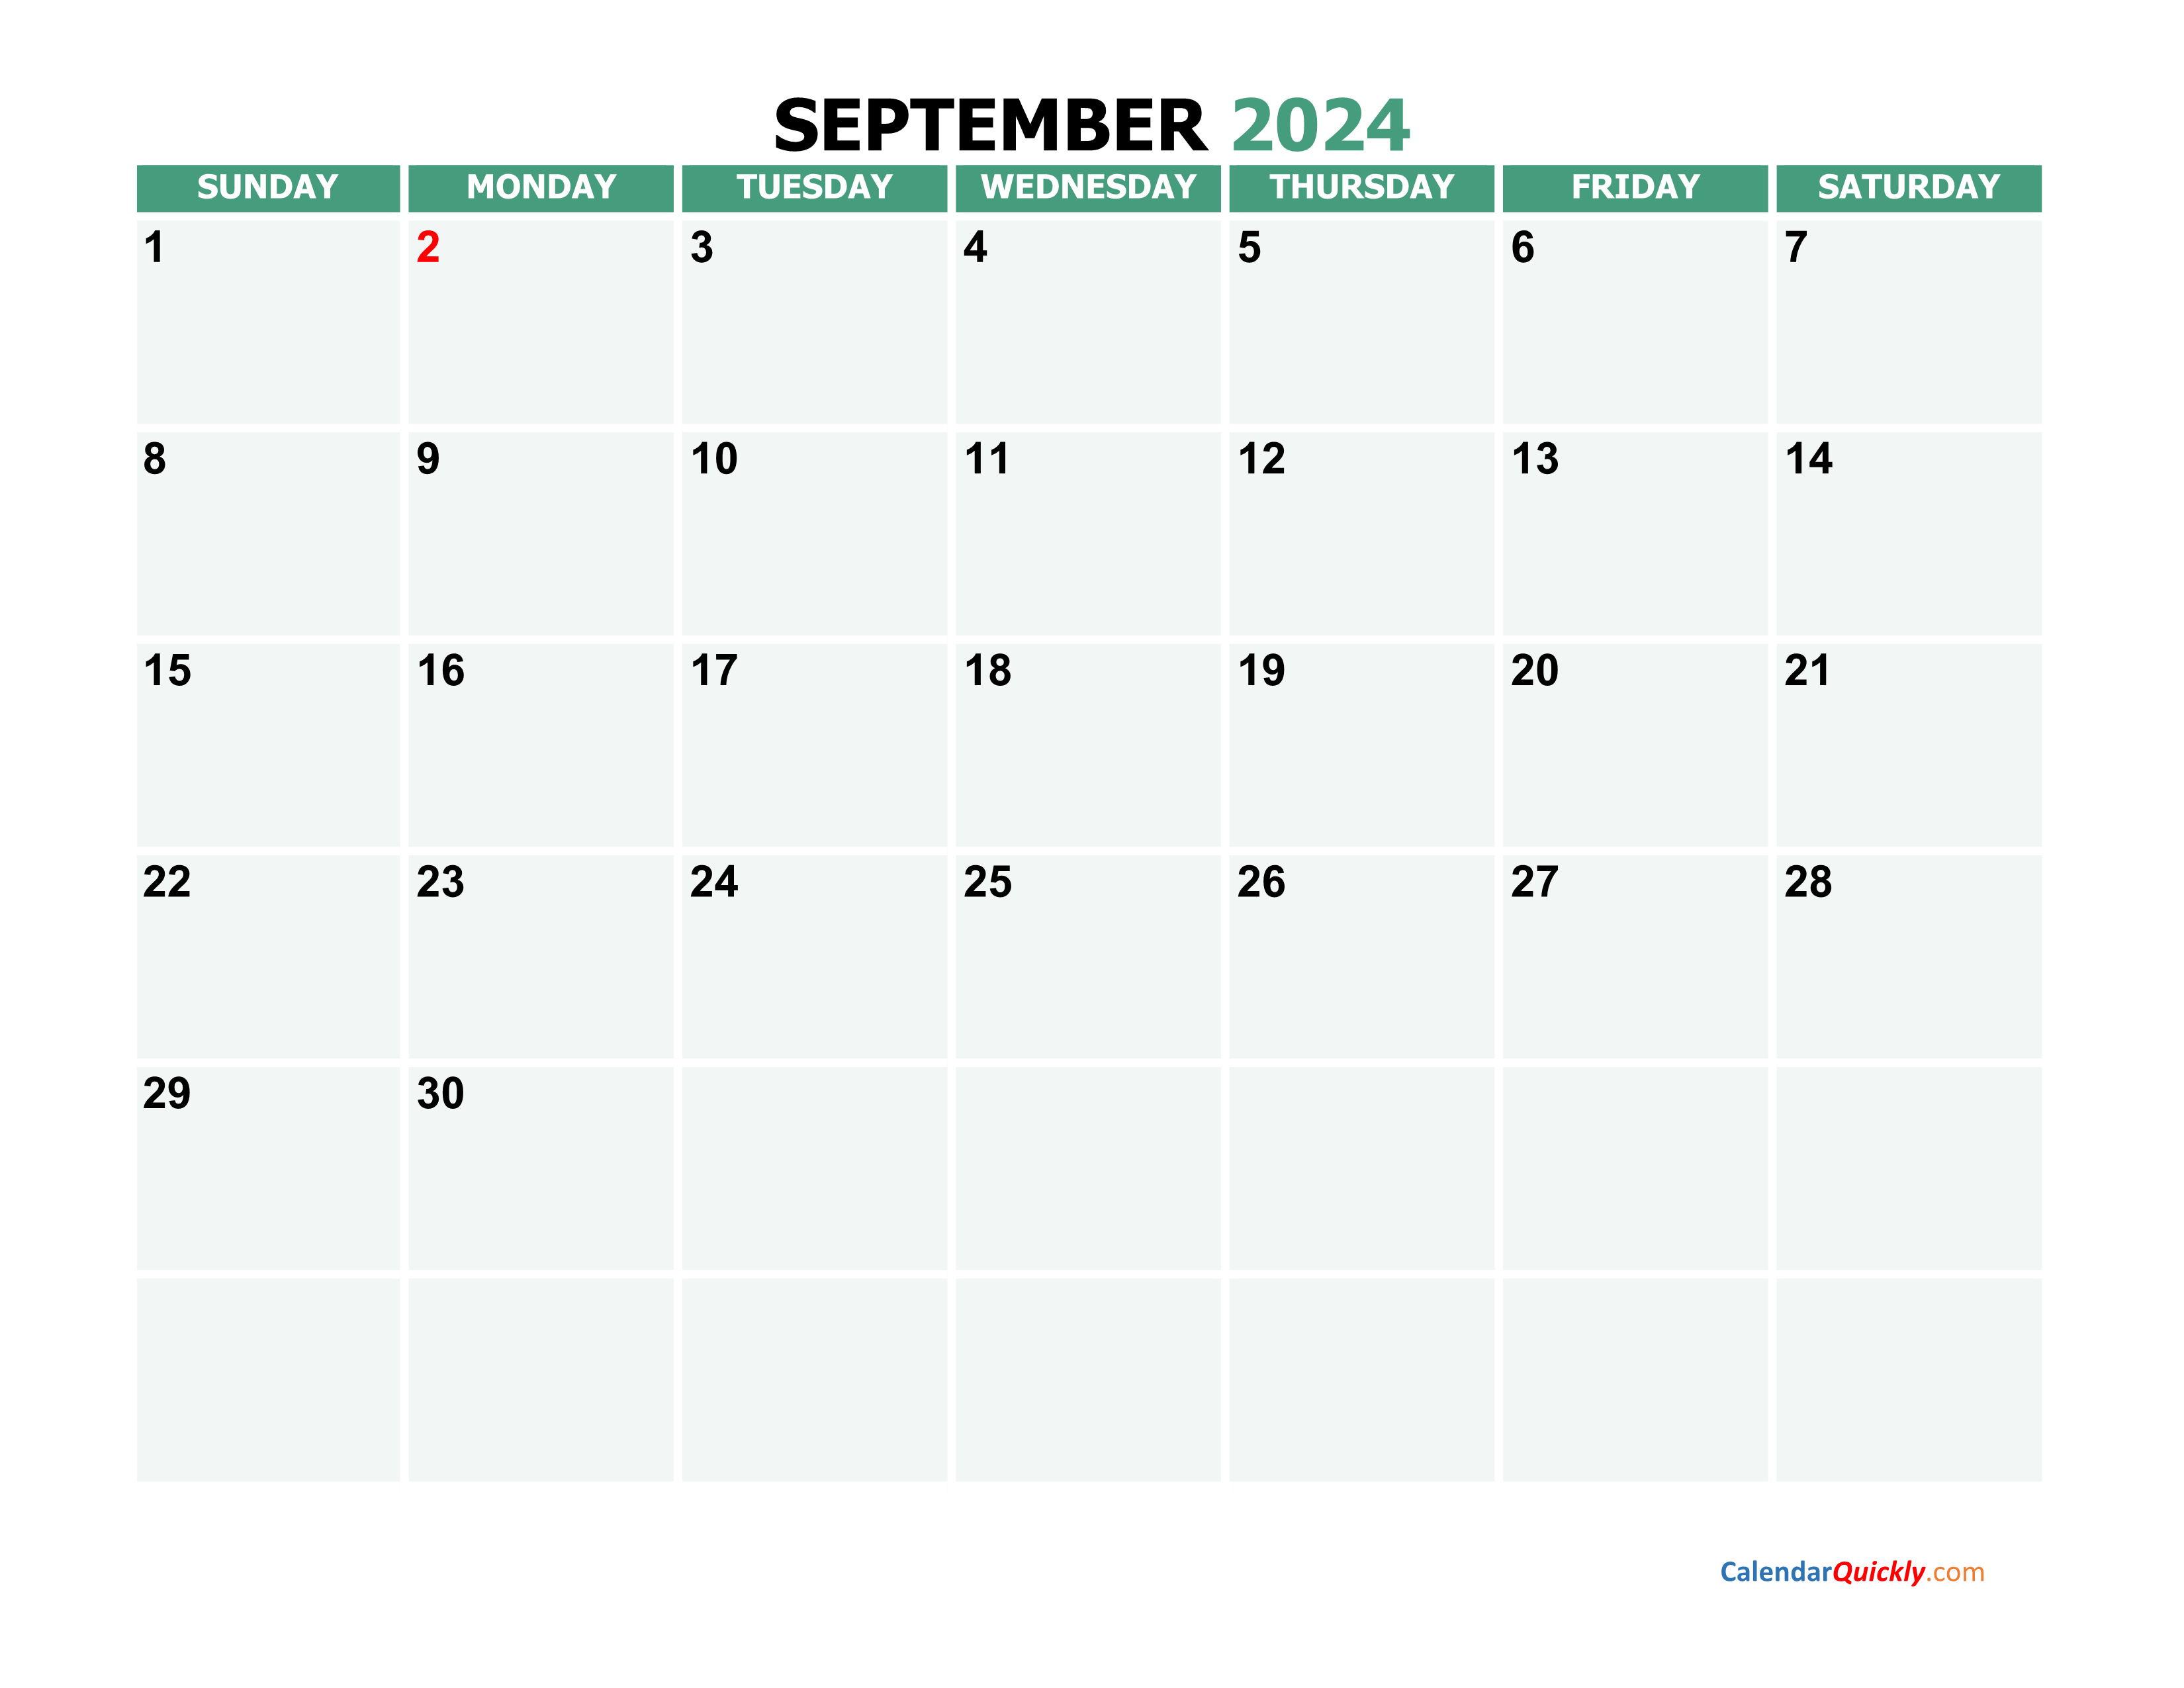 Calendar September 2024 Printable Free Calendar 2024 All Holidays - Free Printable 2024 Calendar September